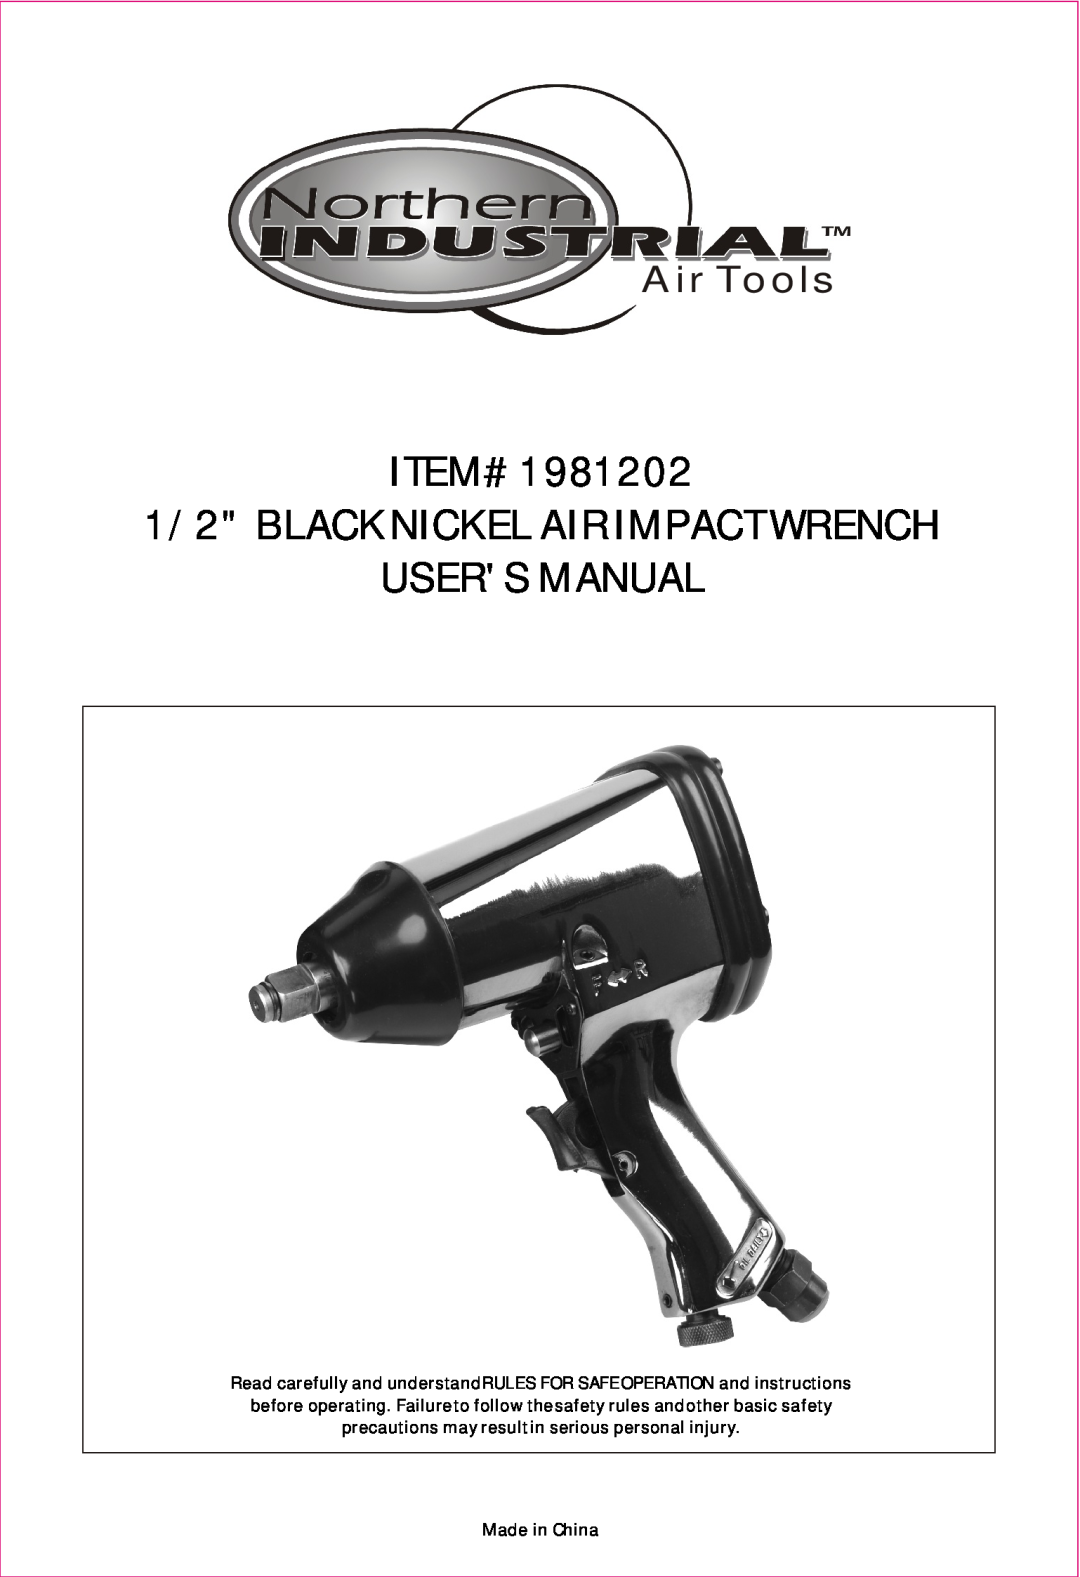 Northern Industrial Tools 1981202 user manual ITEM# 1/2 BLACK NICKEL AIR IMPACT WRENCH USERS MANUAL, Air Tools 